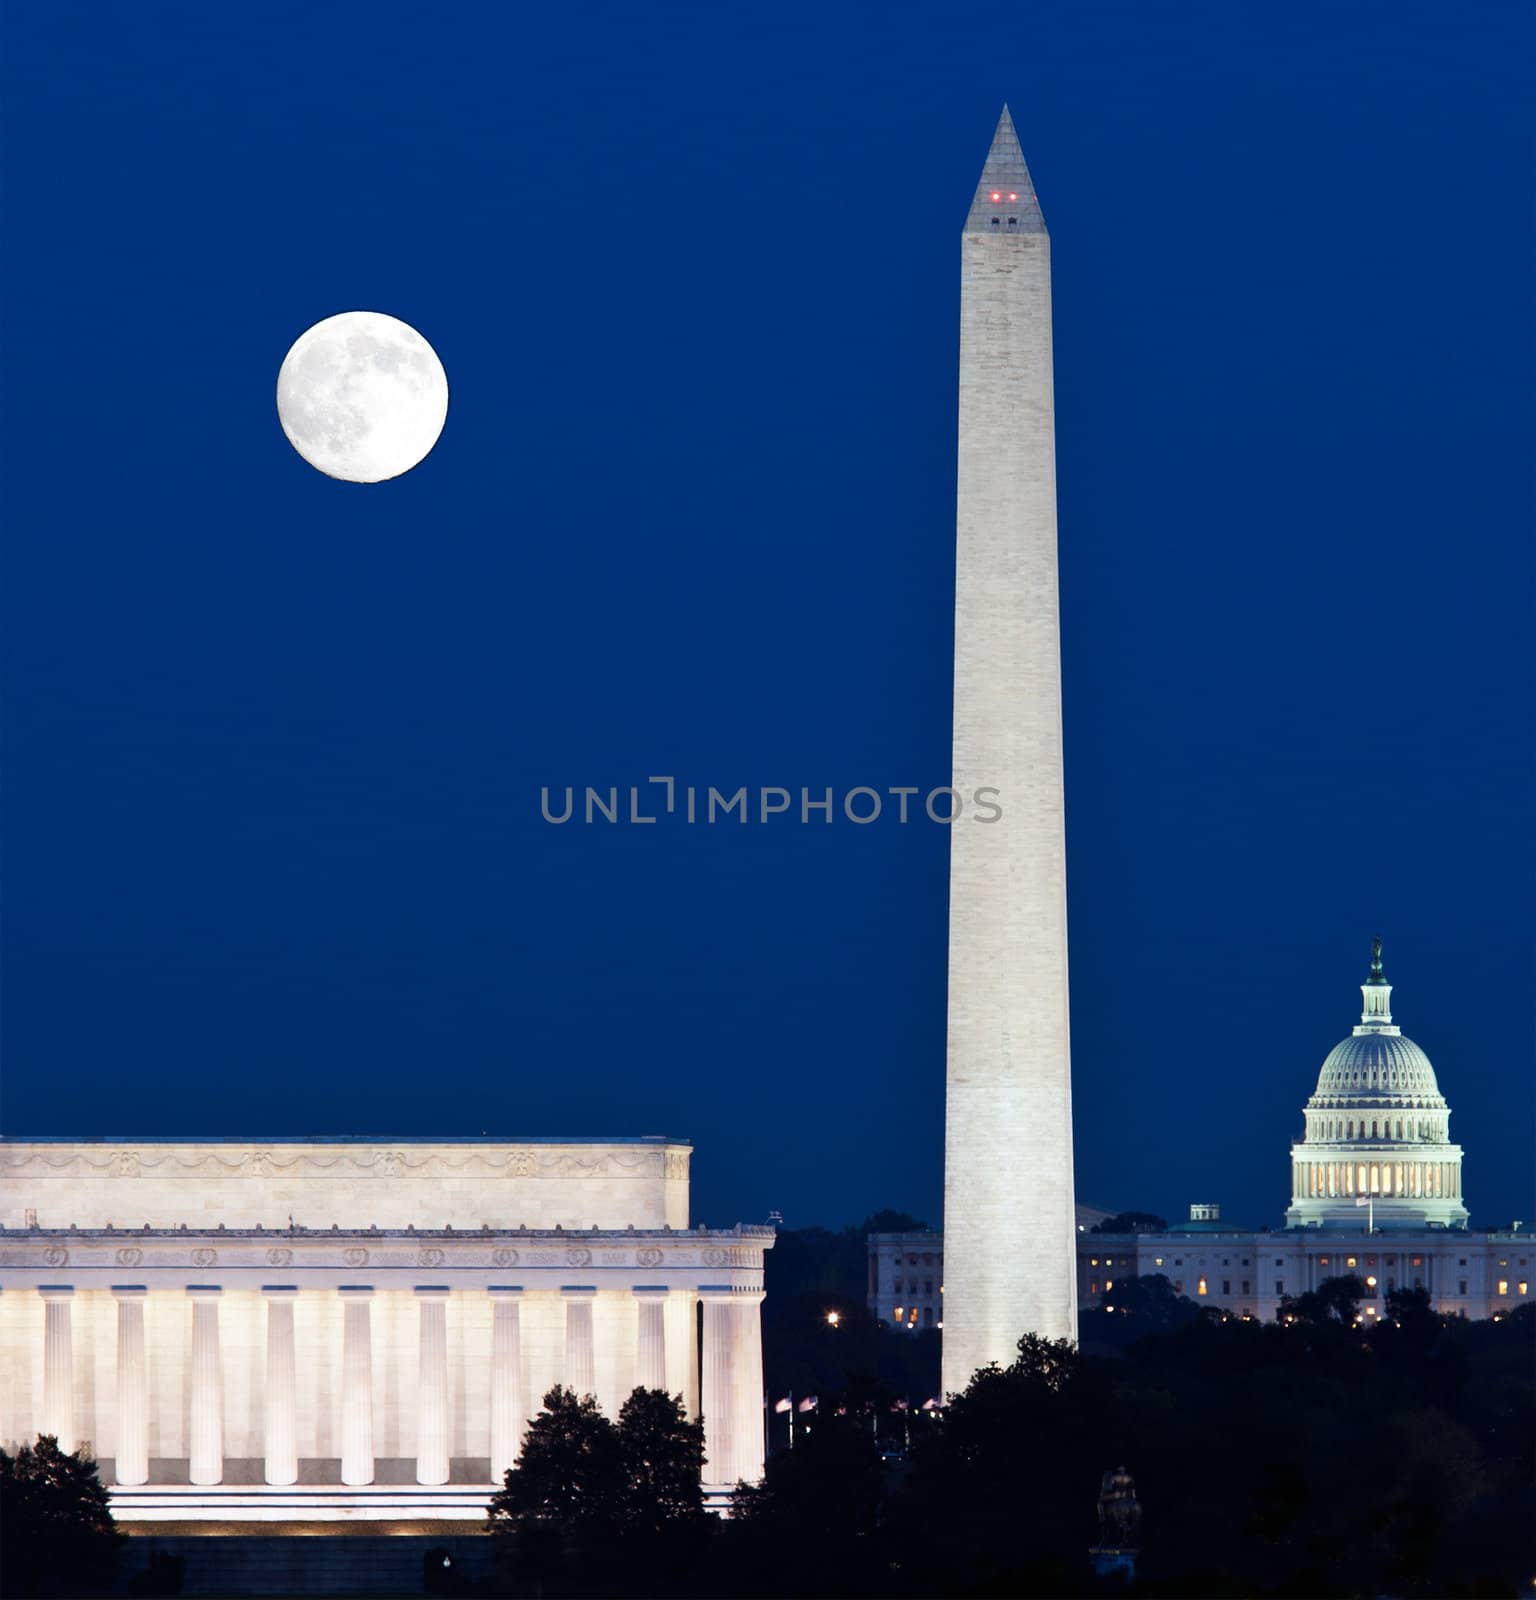 Moon rising in Washington DC by steheap